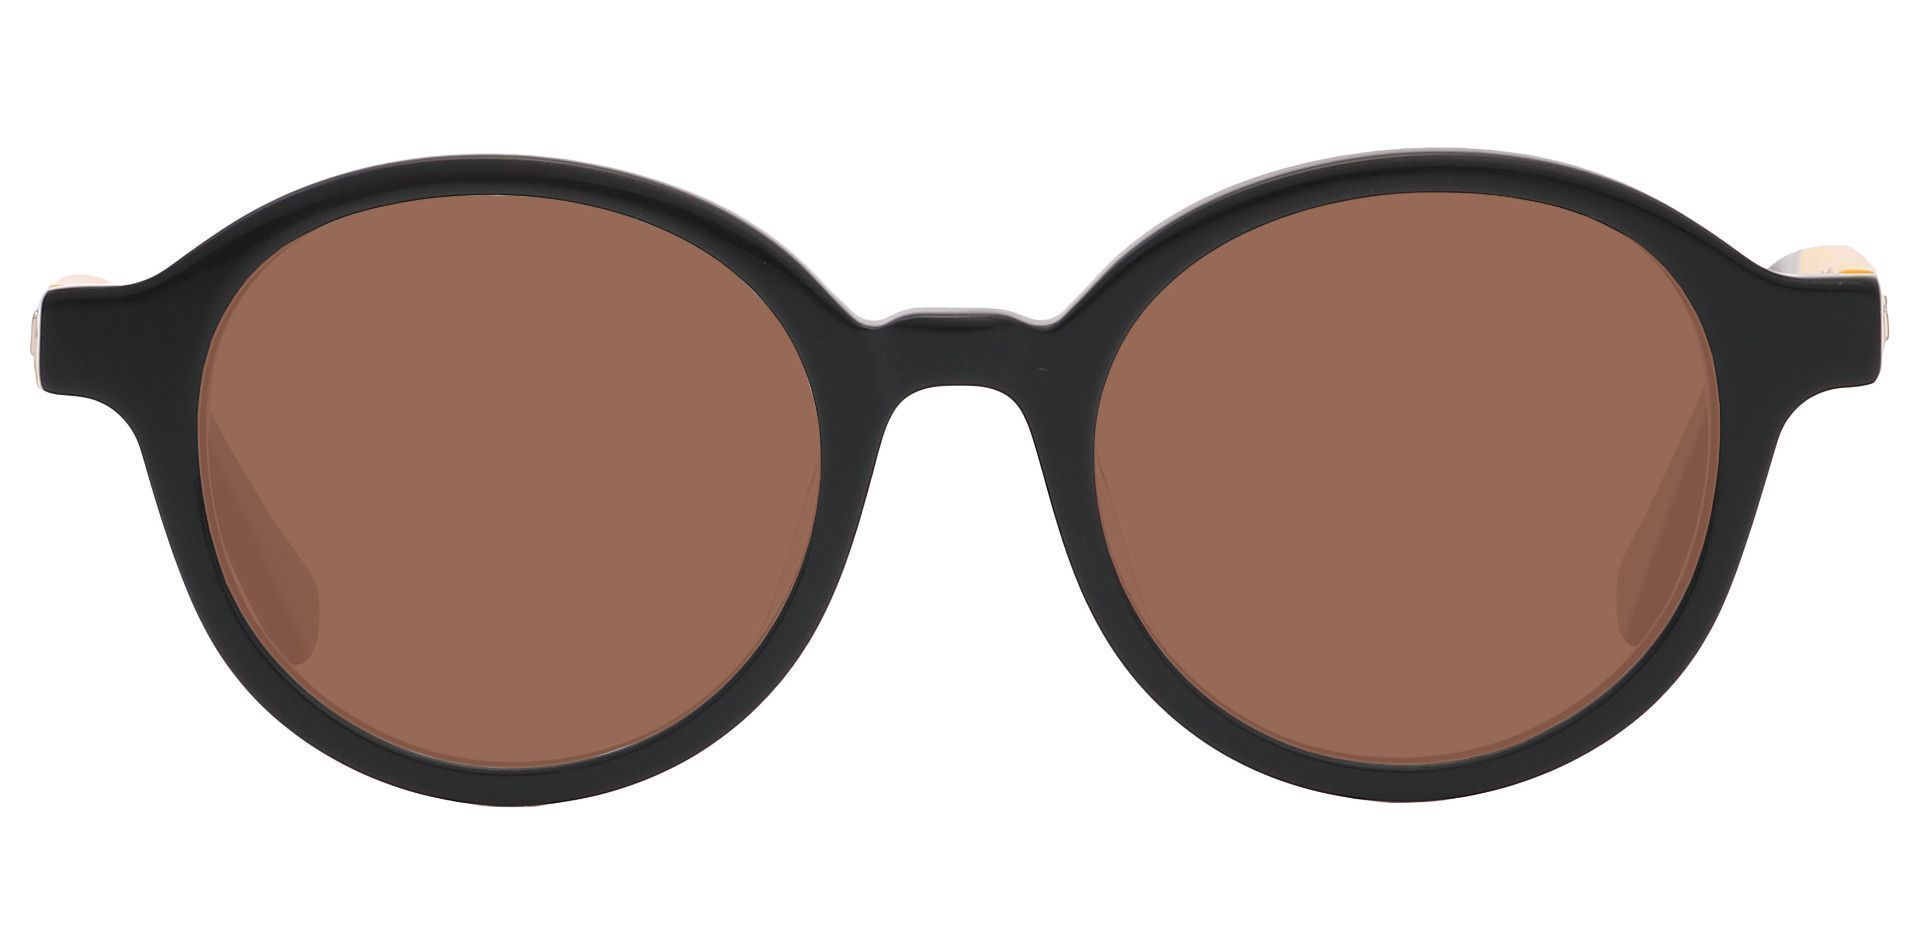 Champ Round Reading Sunglasses - Black Frame With Brown Lenses